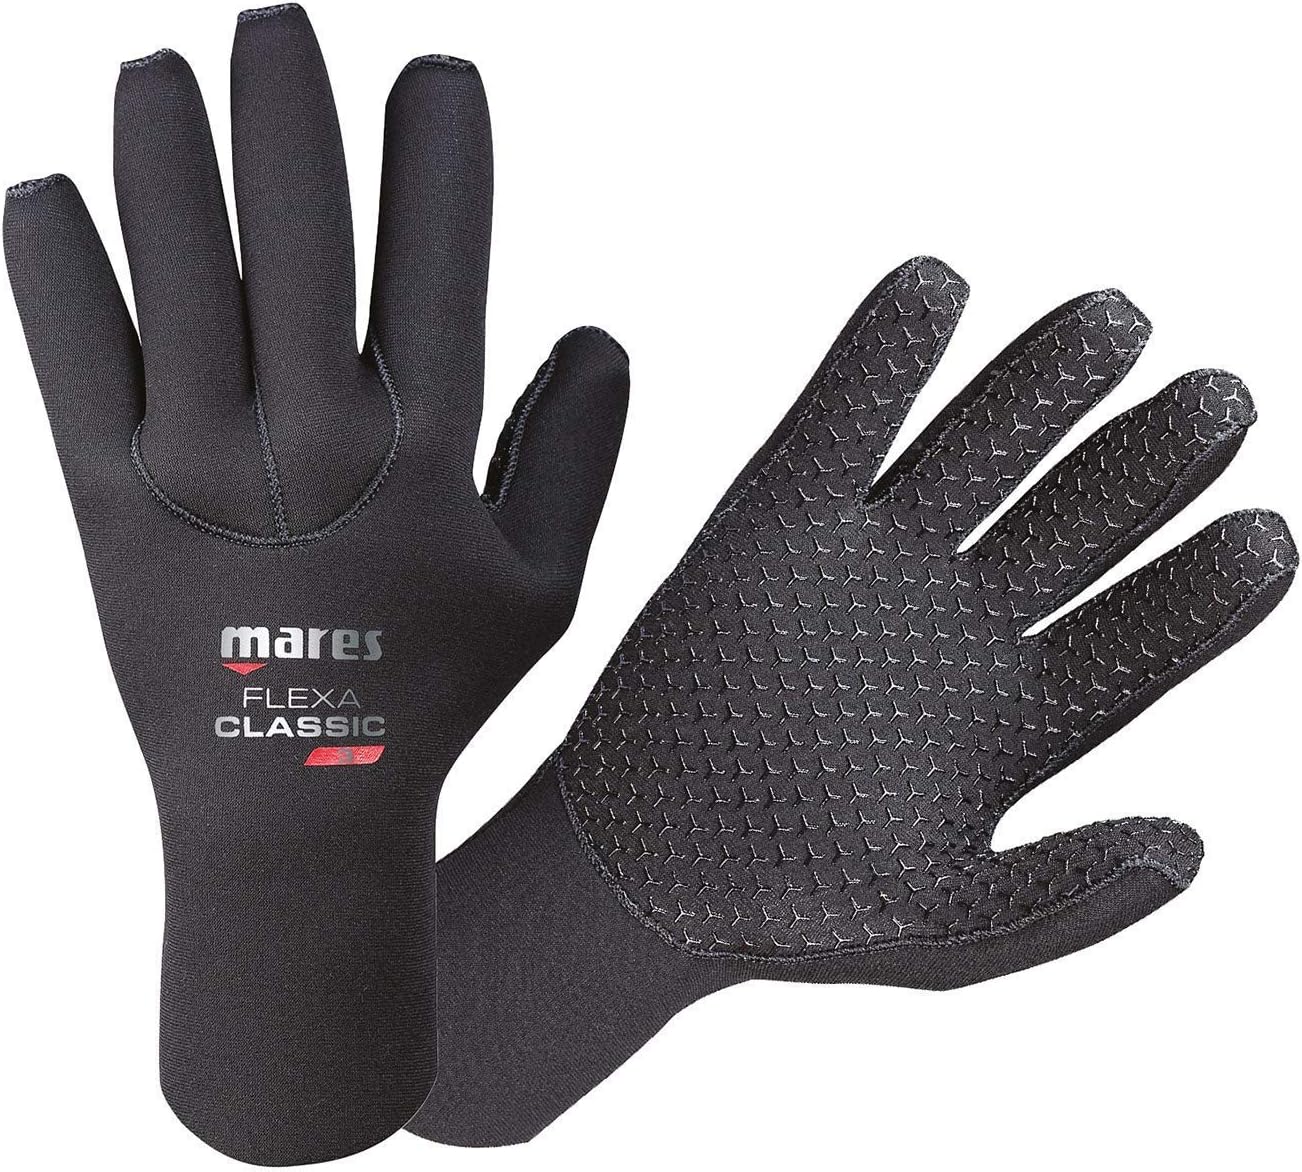 Mares 3mm Flexa Classic Gloves